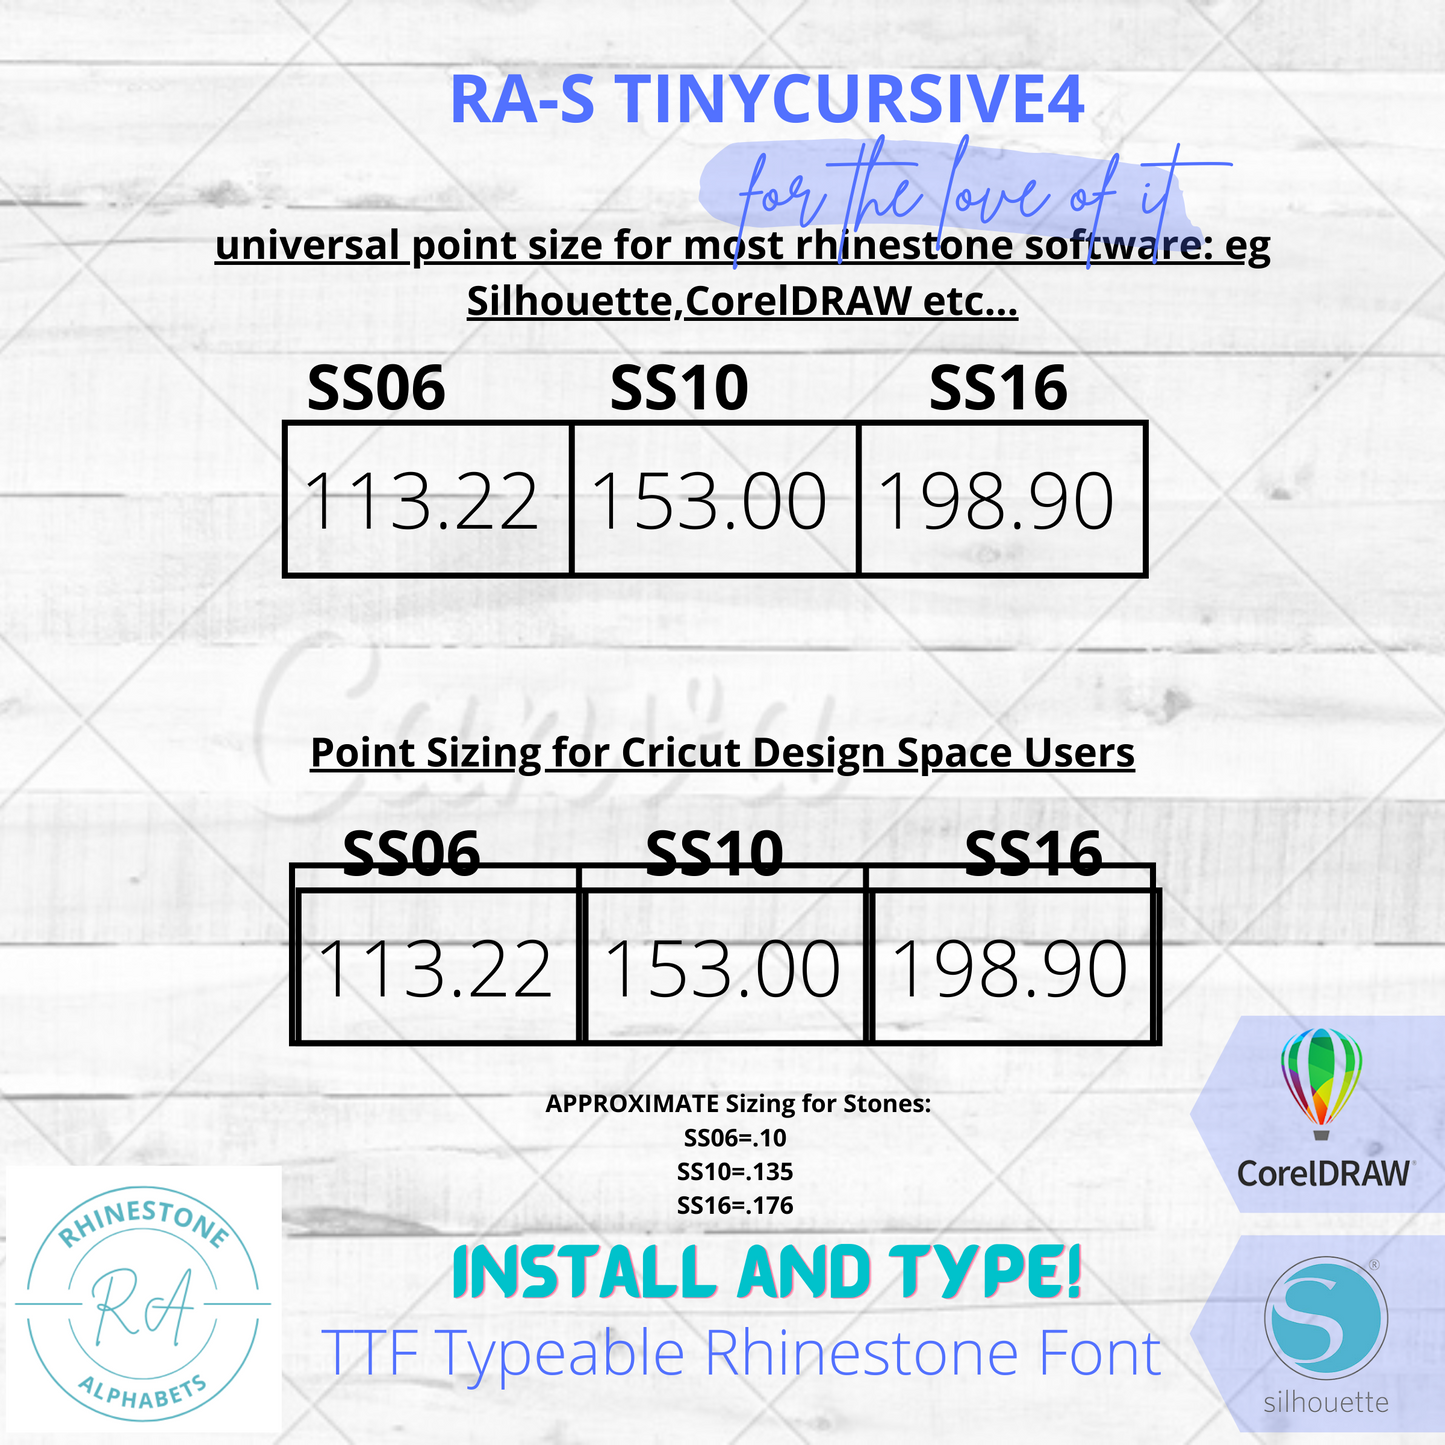 RA-S Tiny Cursive 4